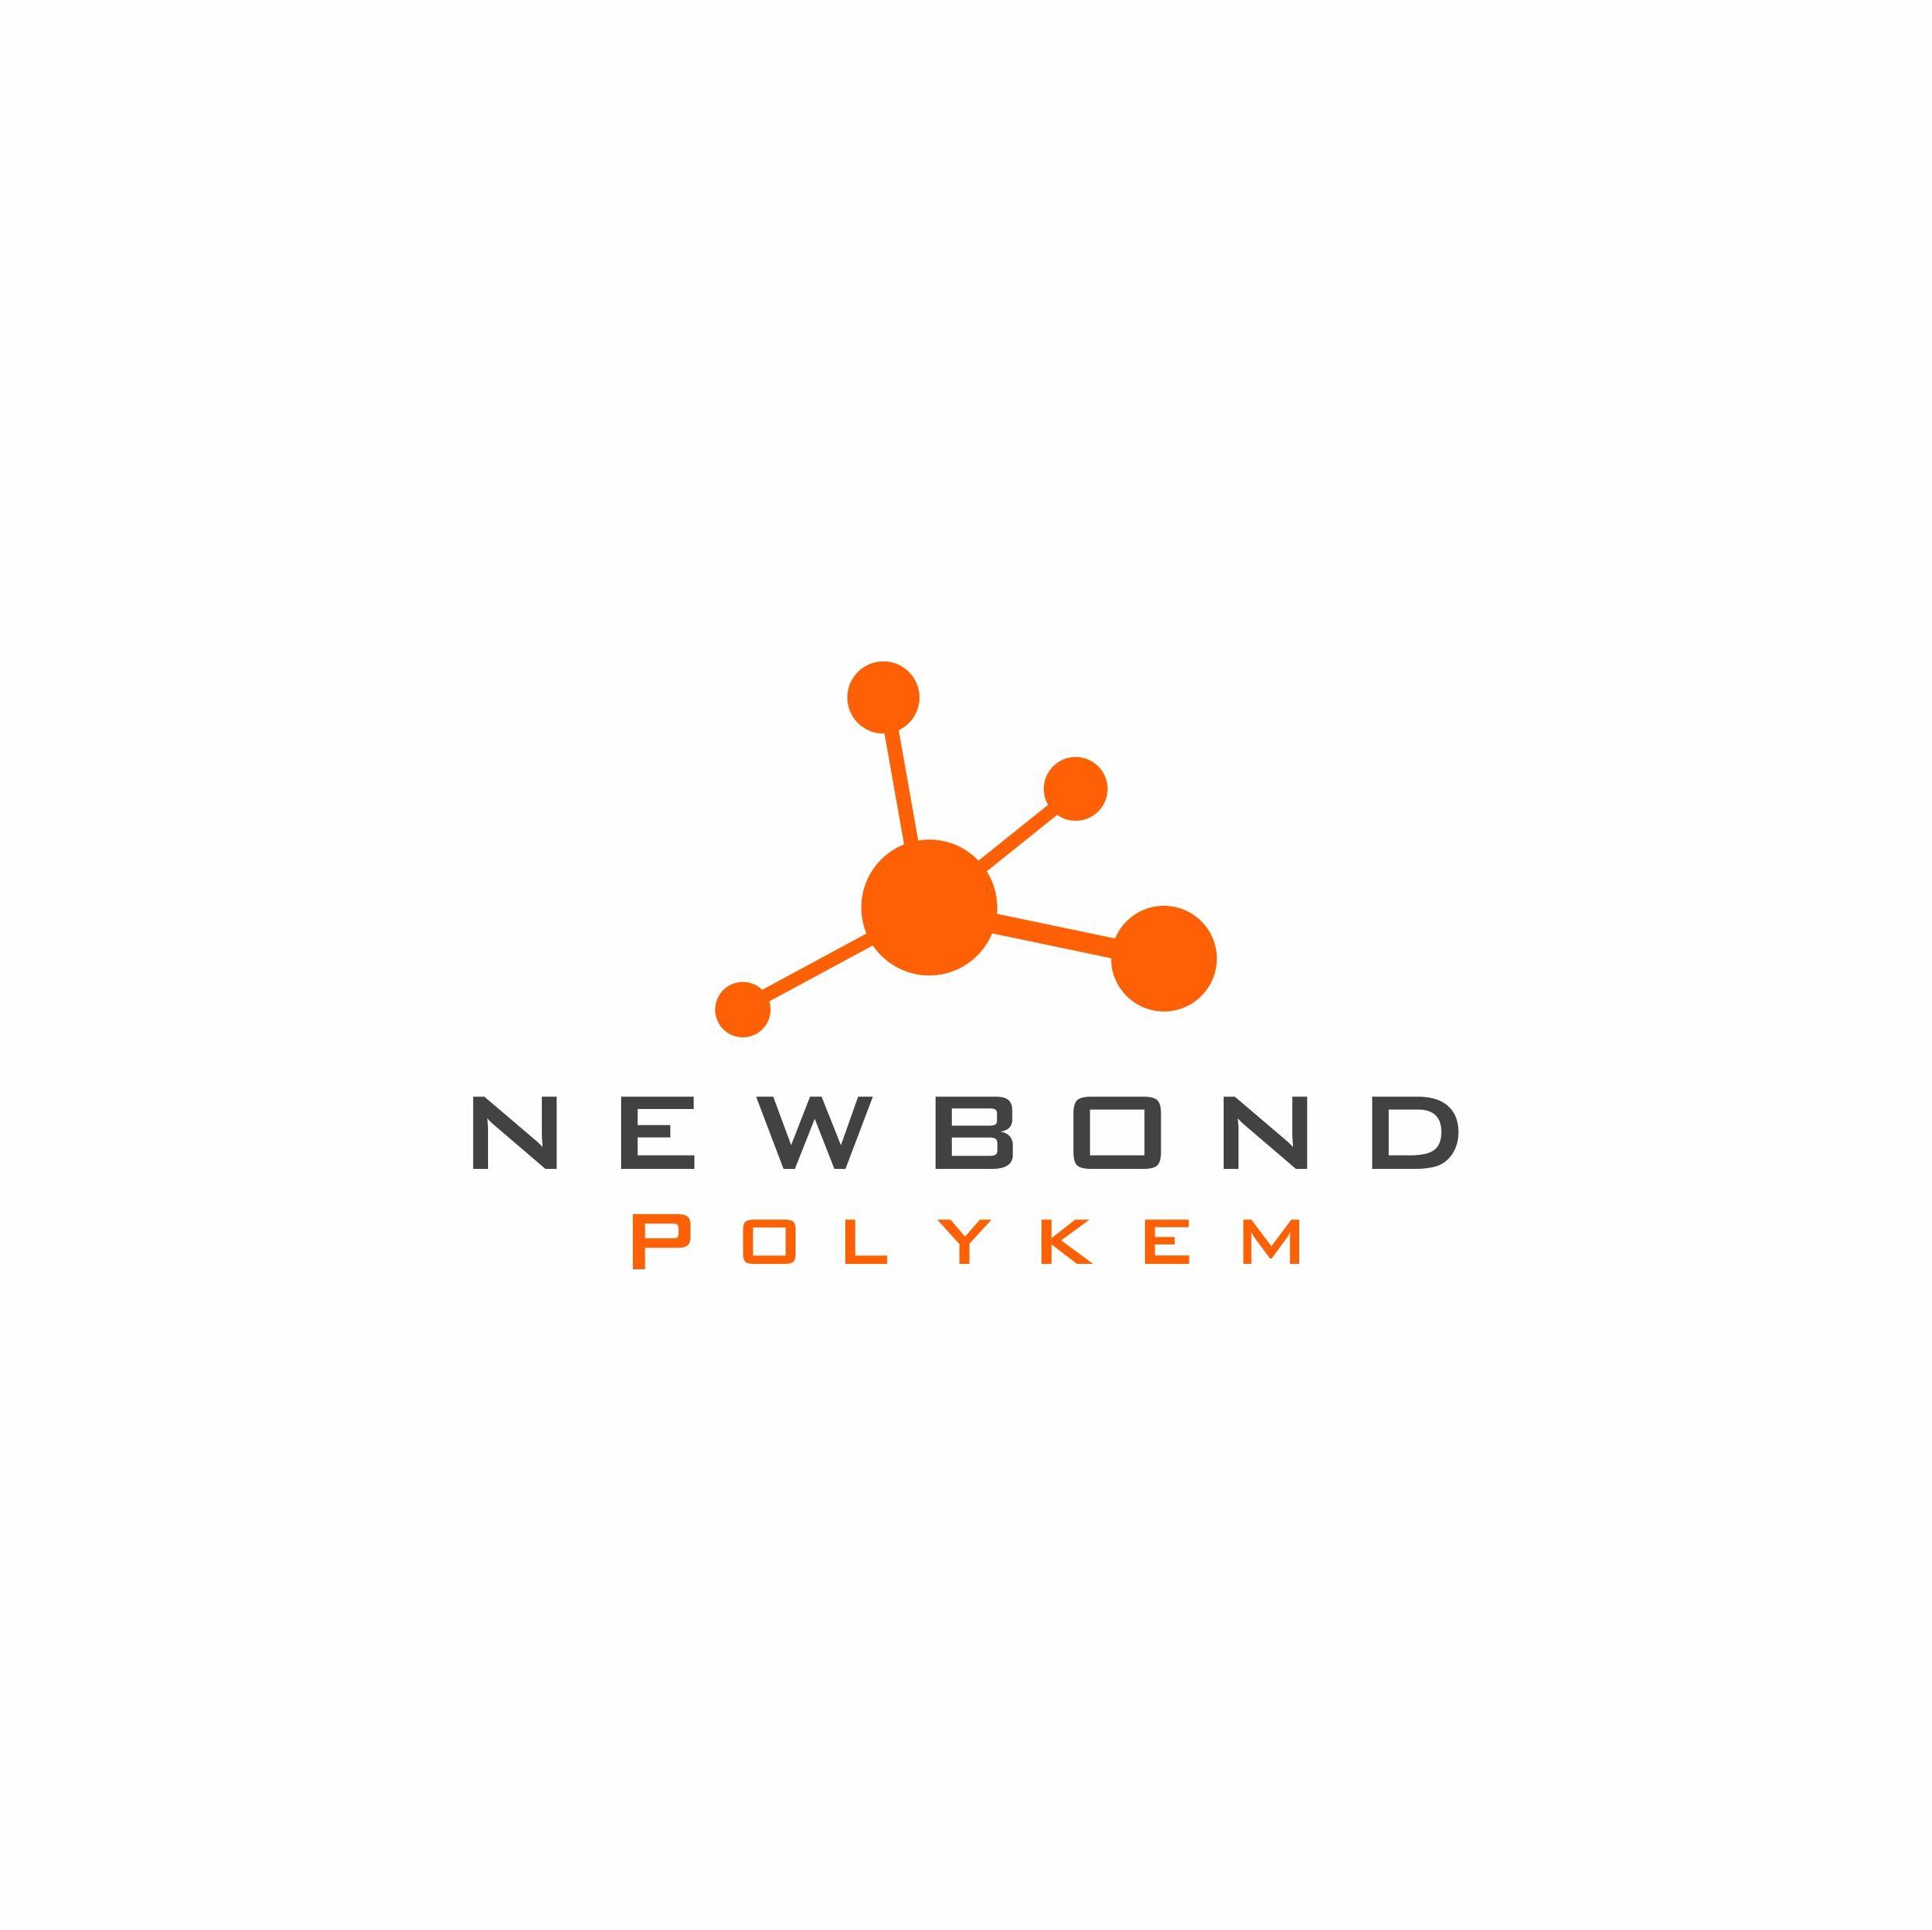 Chemical Logo - NewBond Polykem : Chemical Company logo concept #logo #logos ...